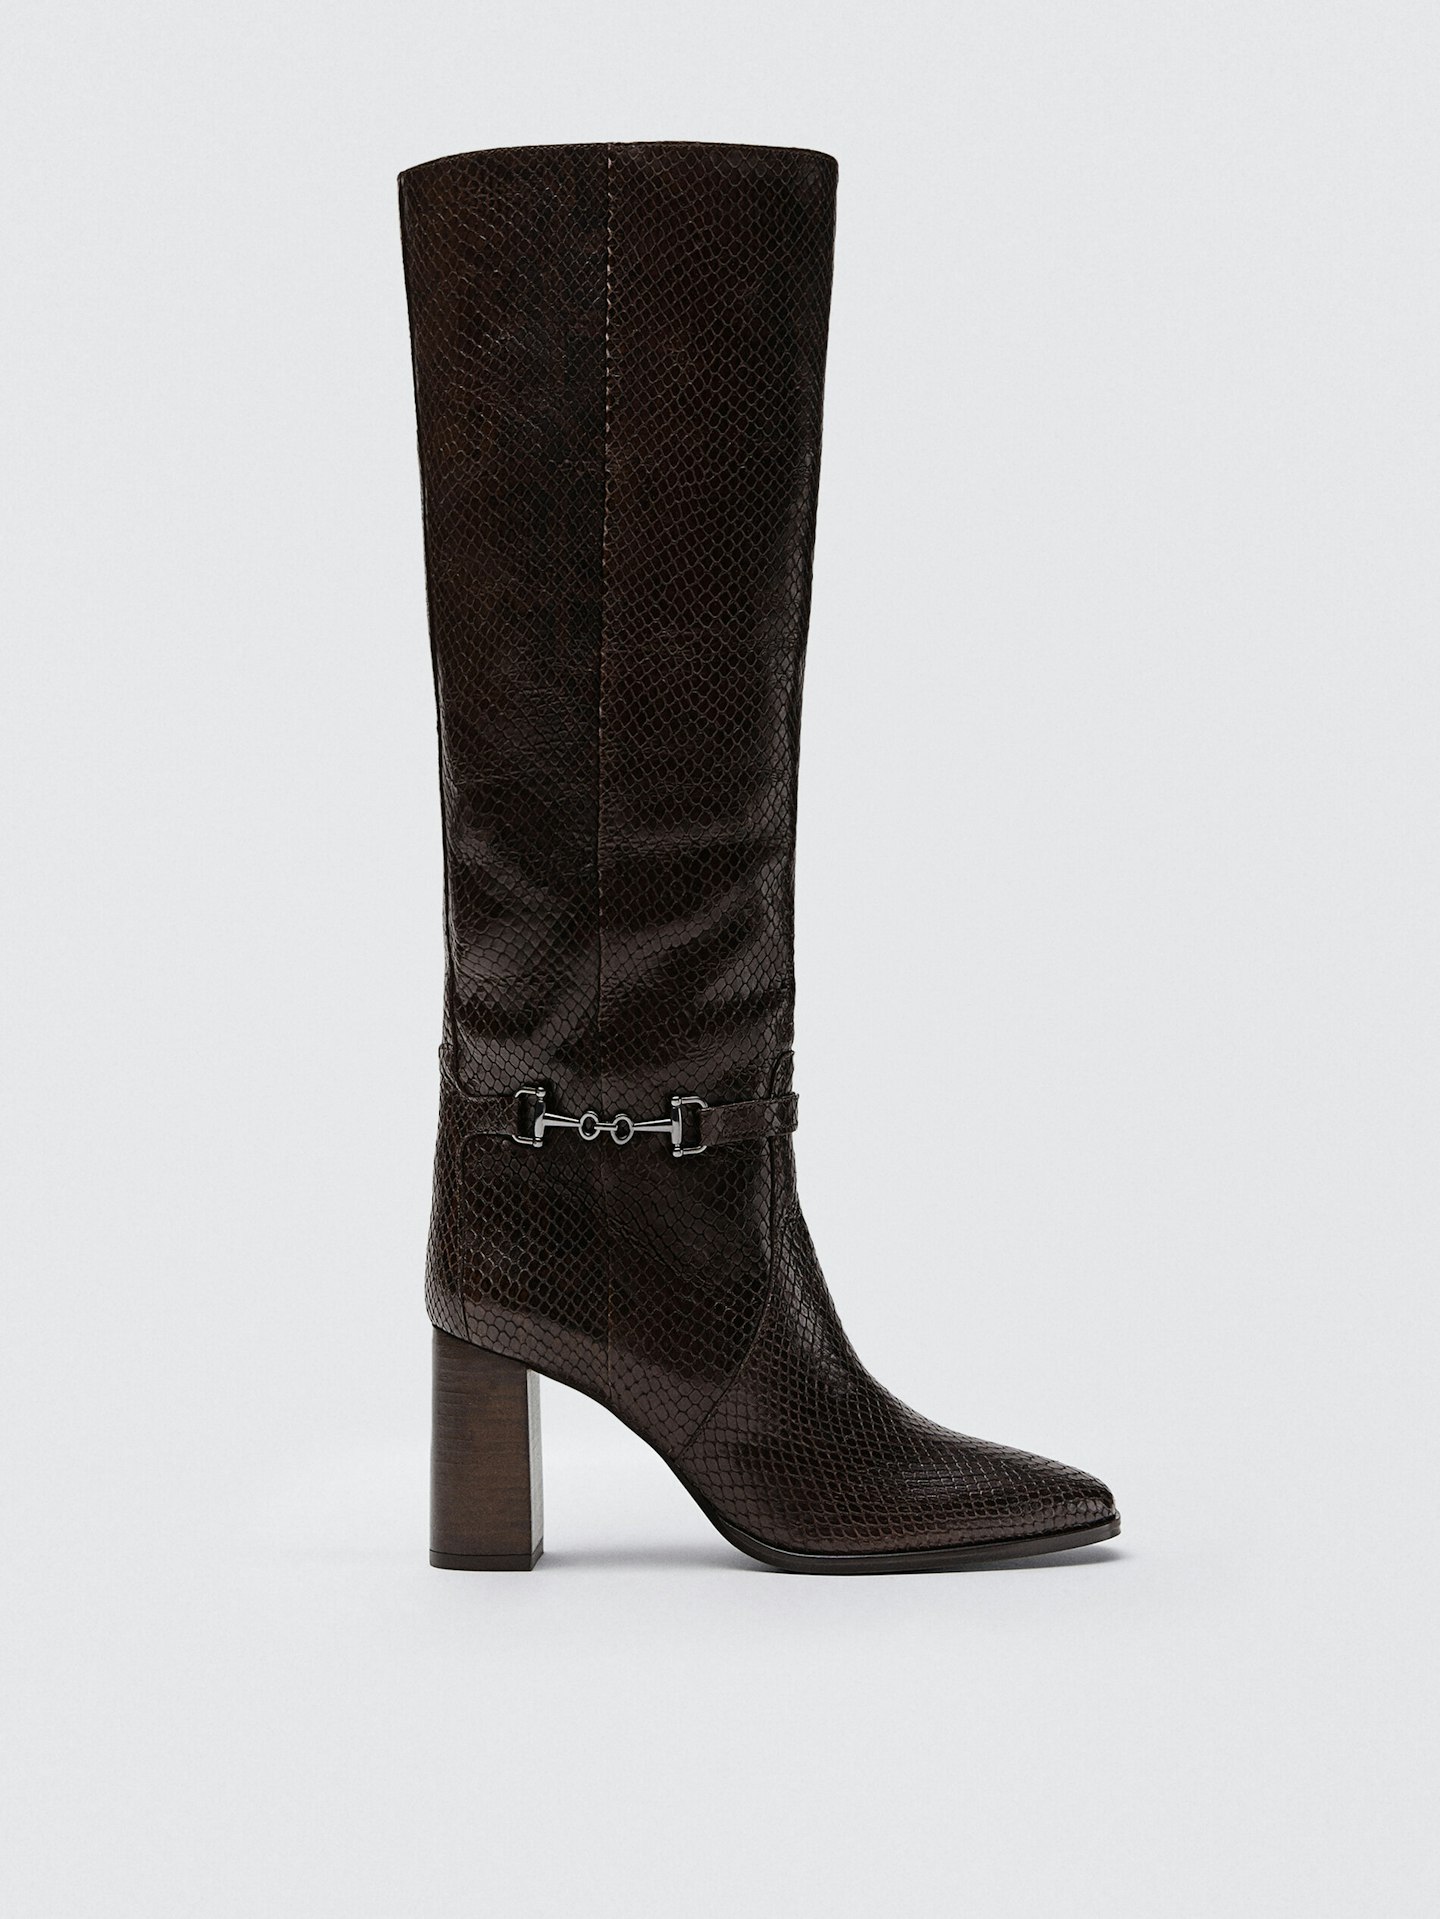 Massimo Dutti, Animal Print Leather High-Heel Boots, £219